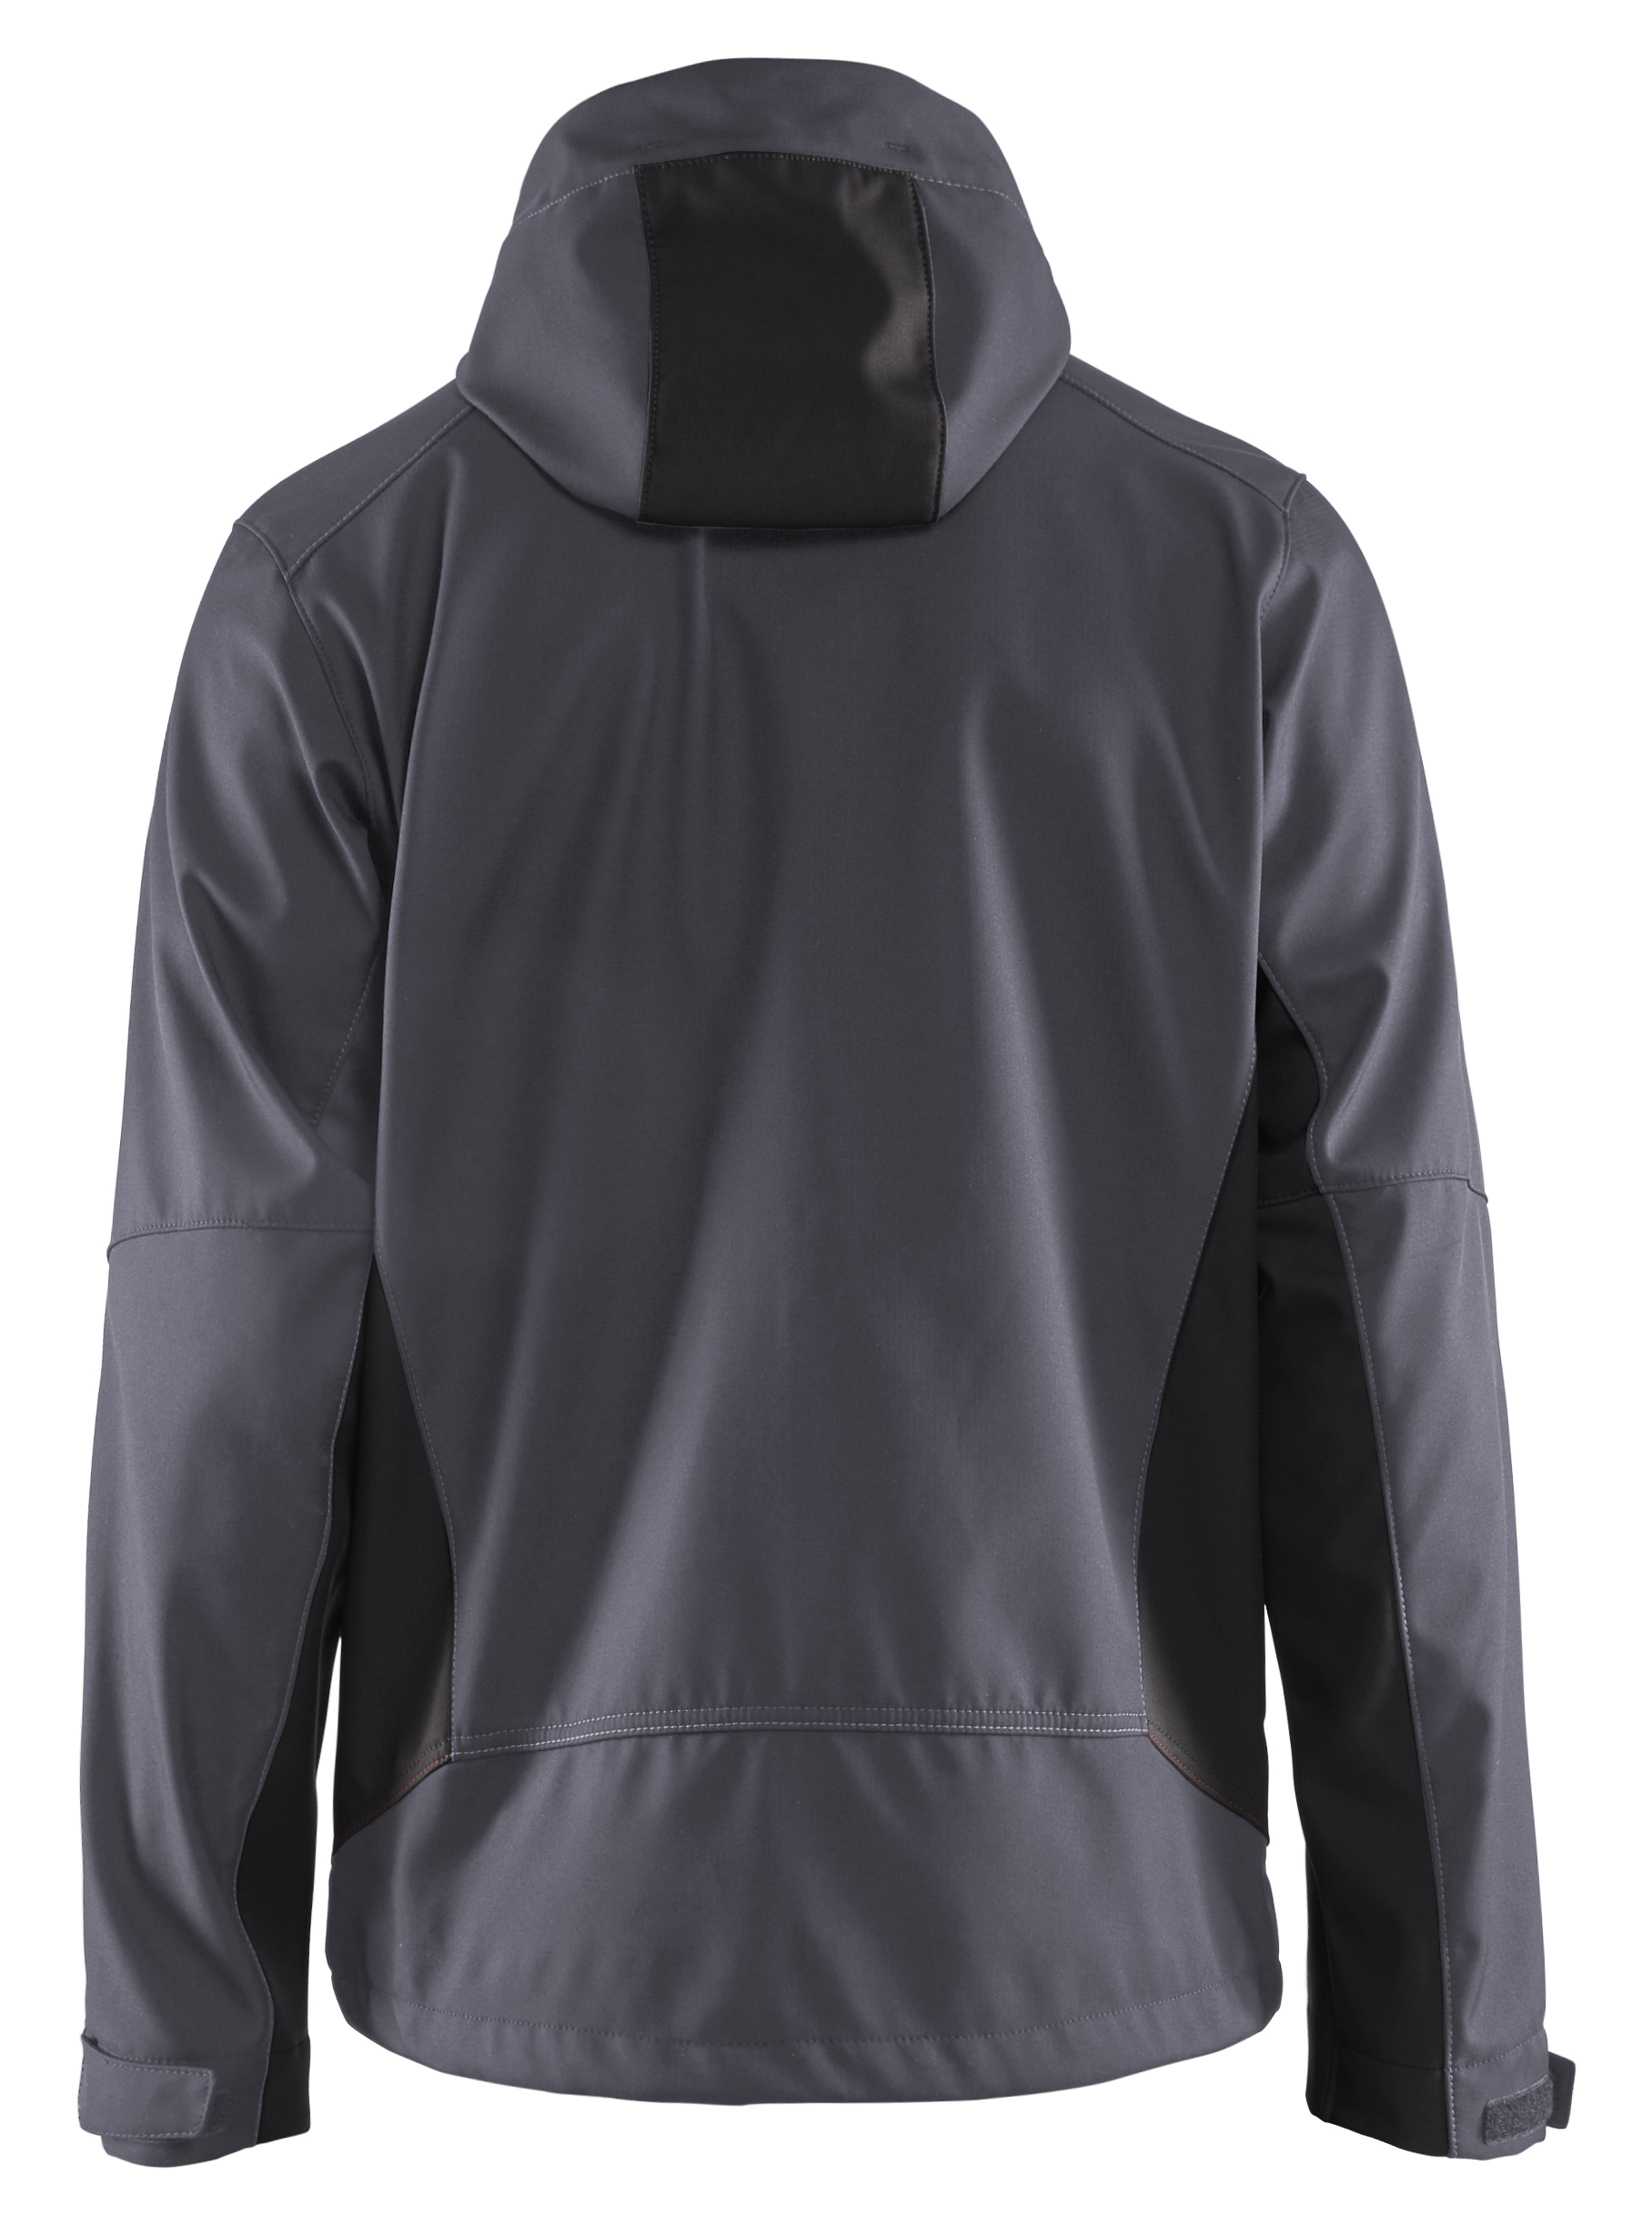 Softshell jacket with hood (47532516) - Blaklader